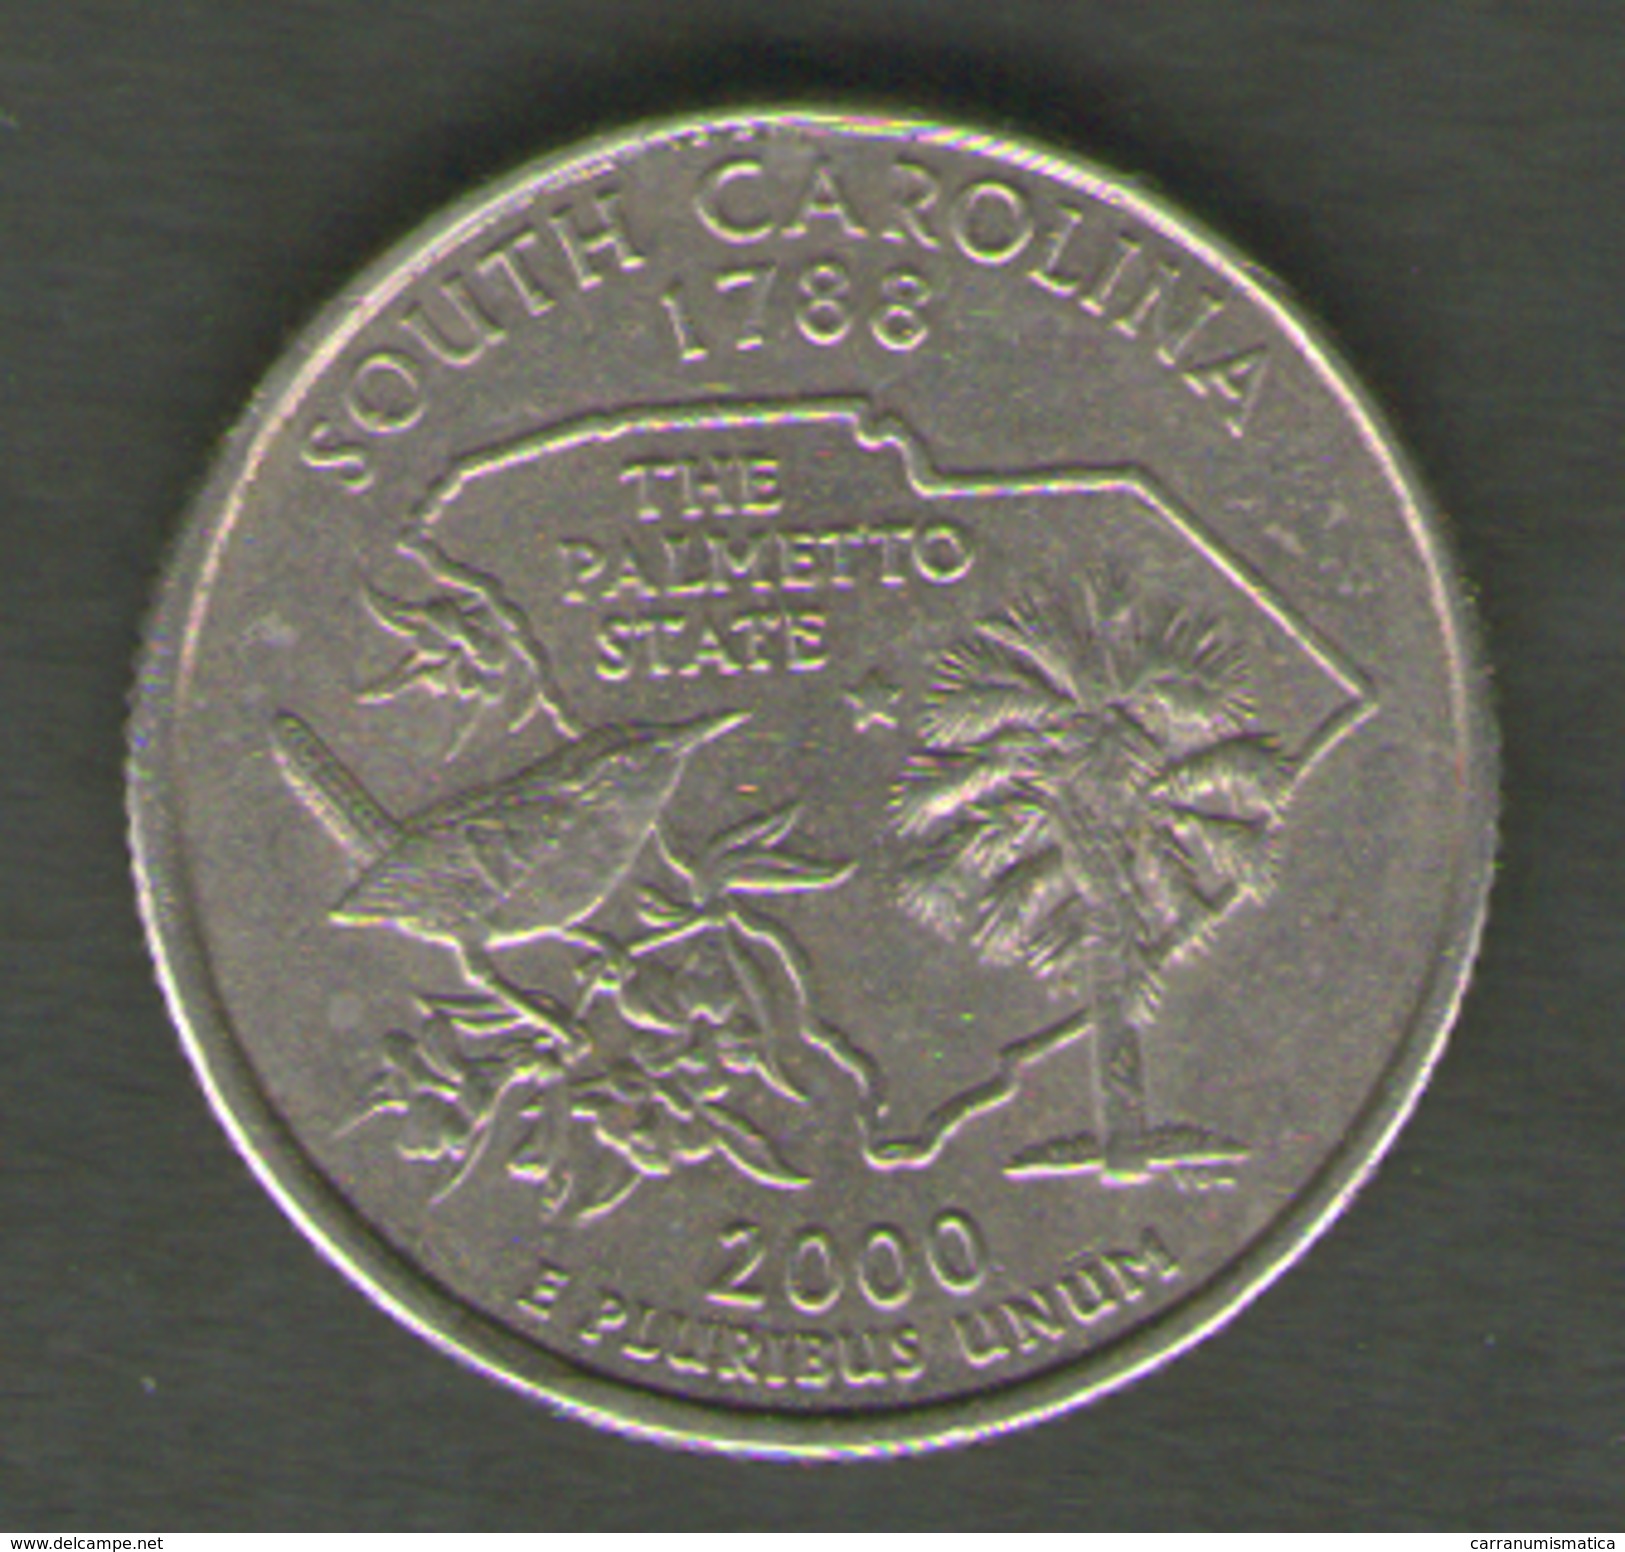 STATI UNITI QUARTER DOLLAR 2000 SOUTH CAROLINA - 1999-2009: State Quarters